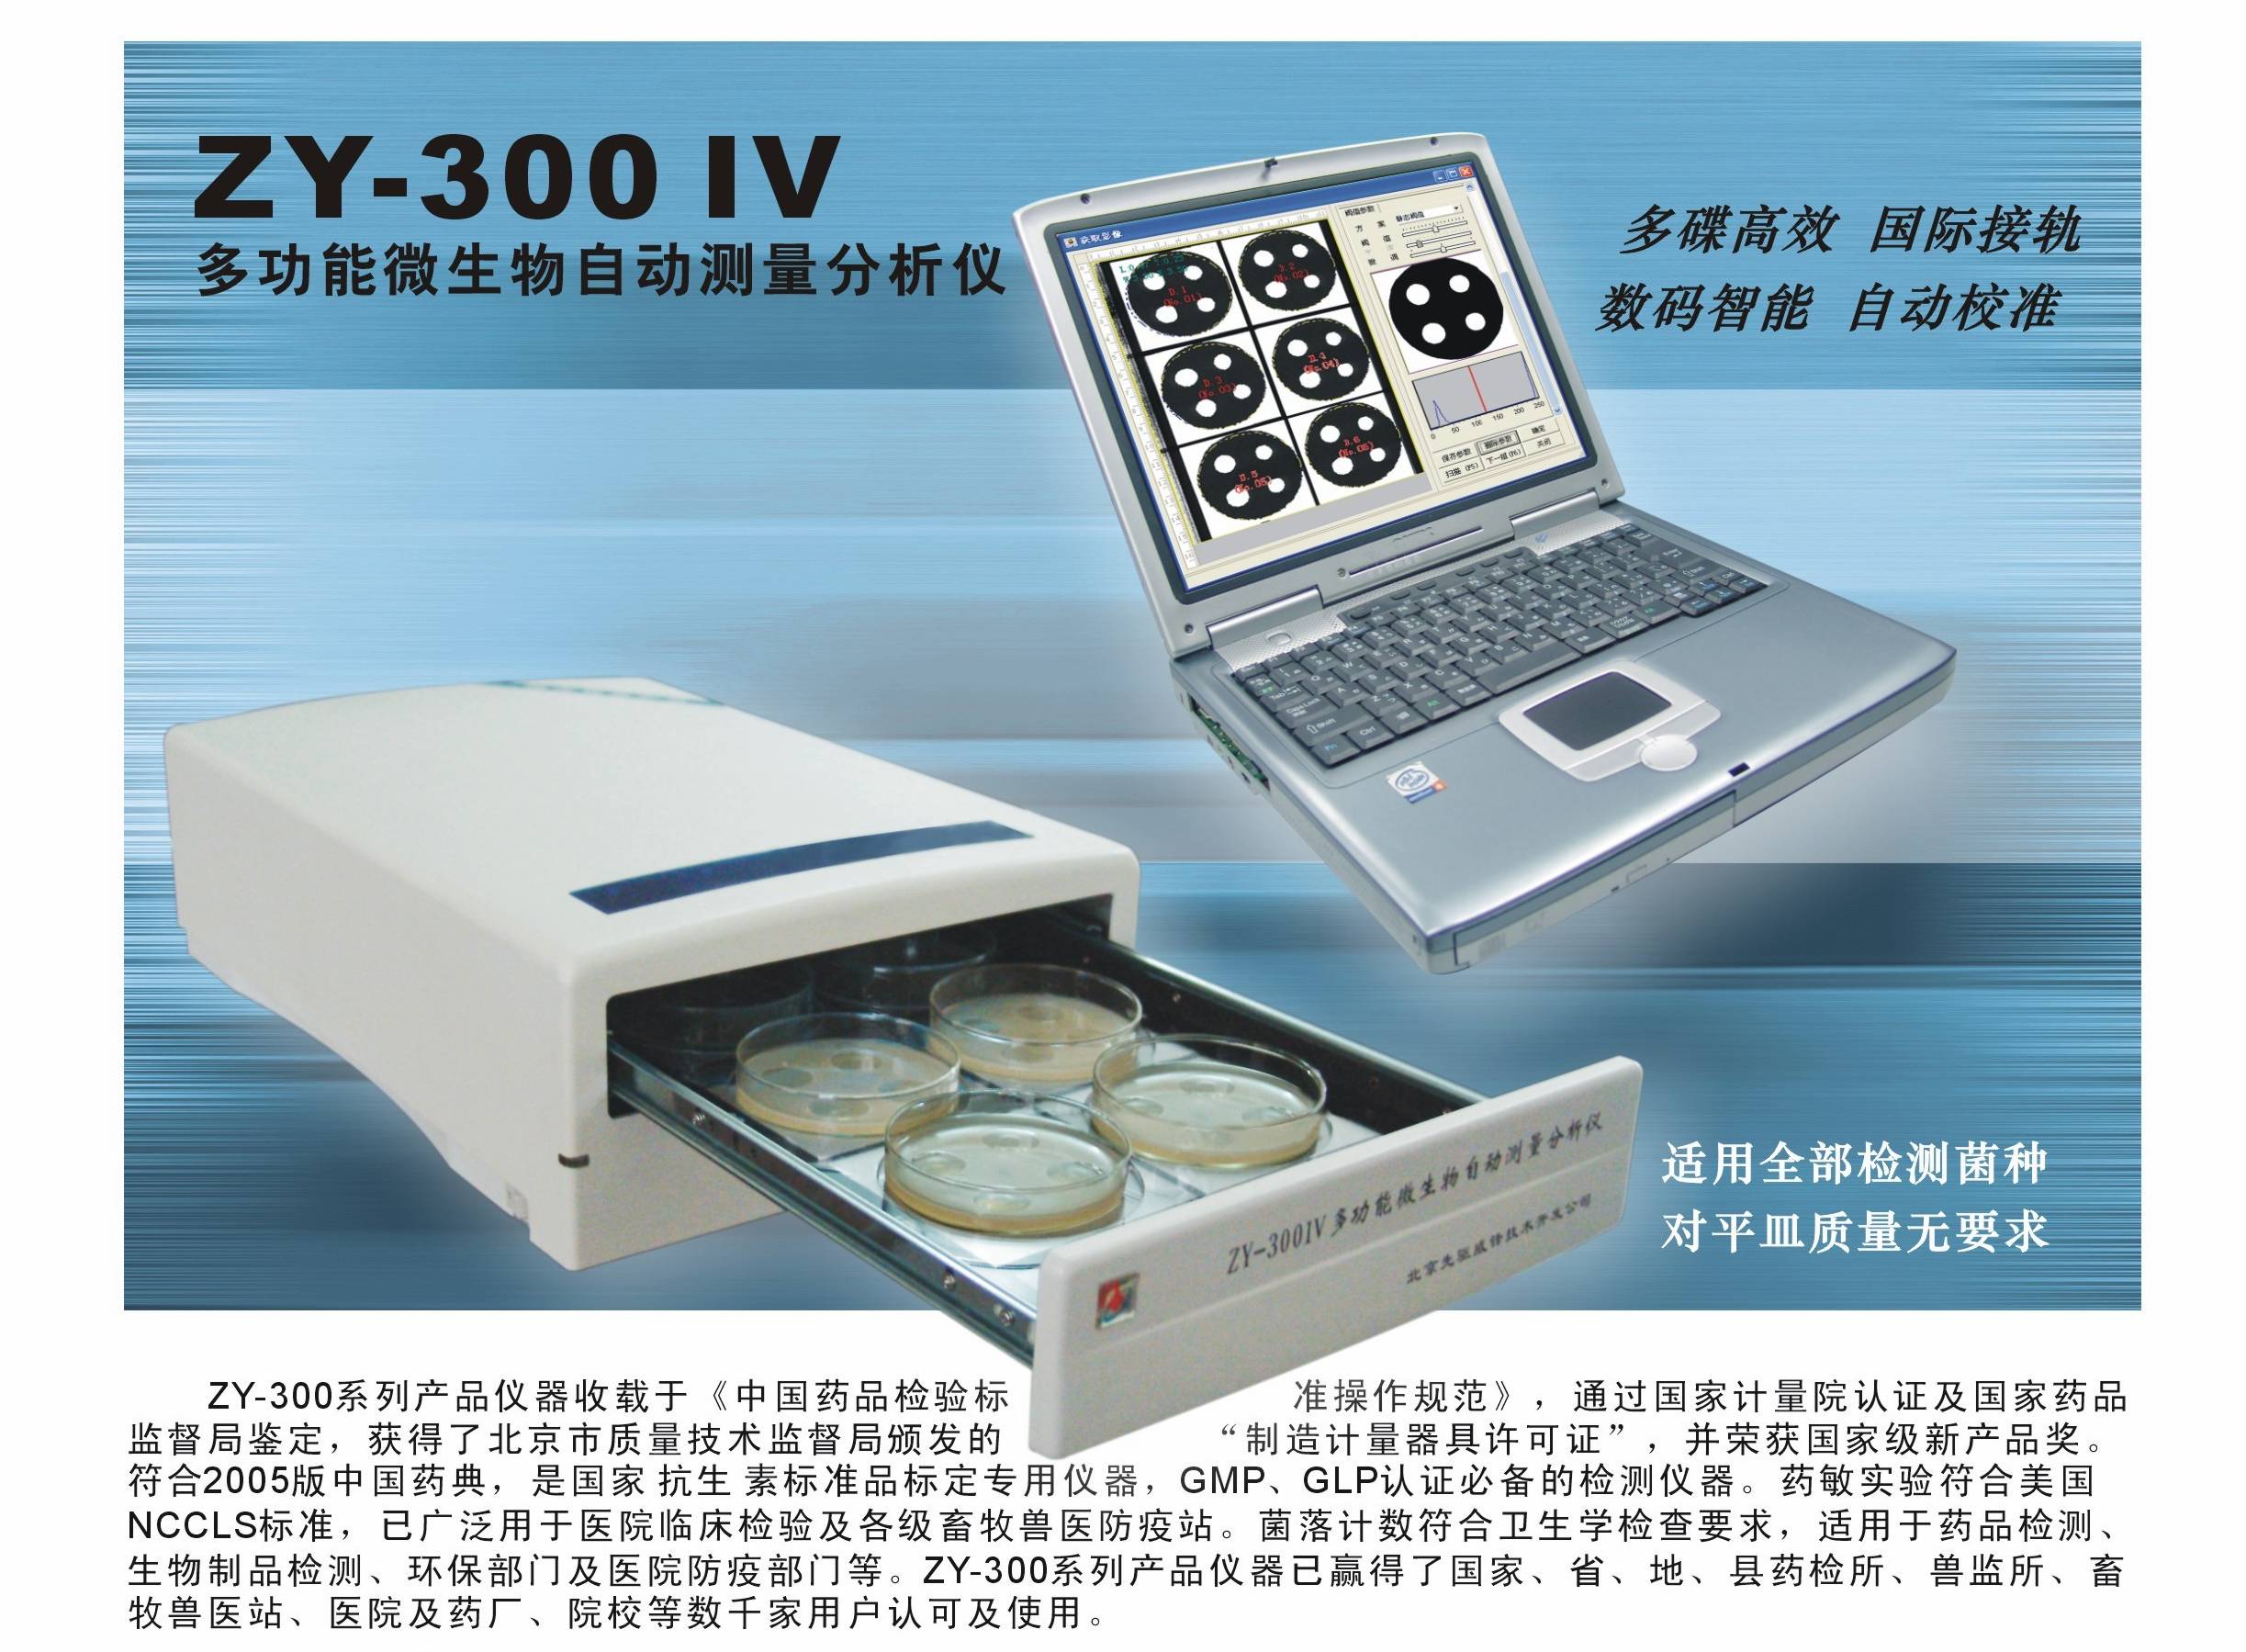 ZY-300IV抗生素效价自动测量分析仪、抑菌圈自动测量分析仪